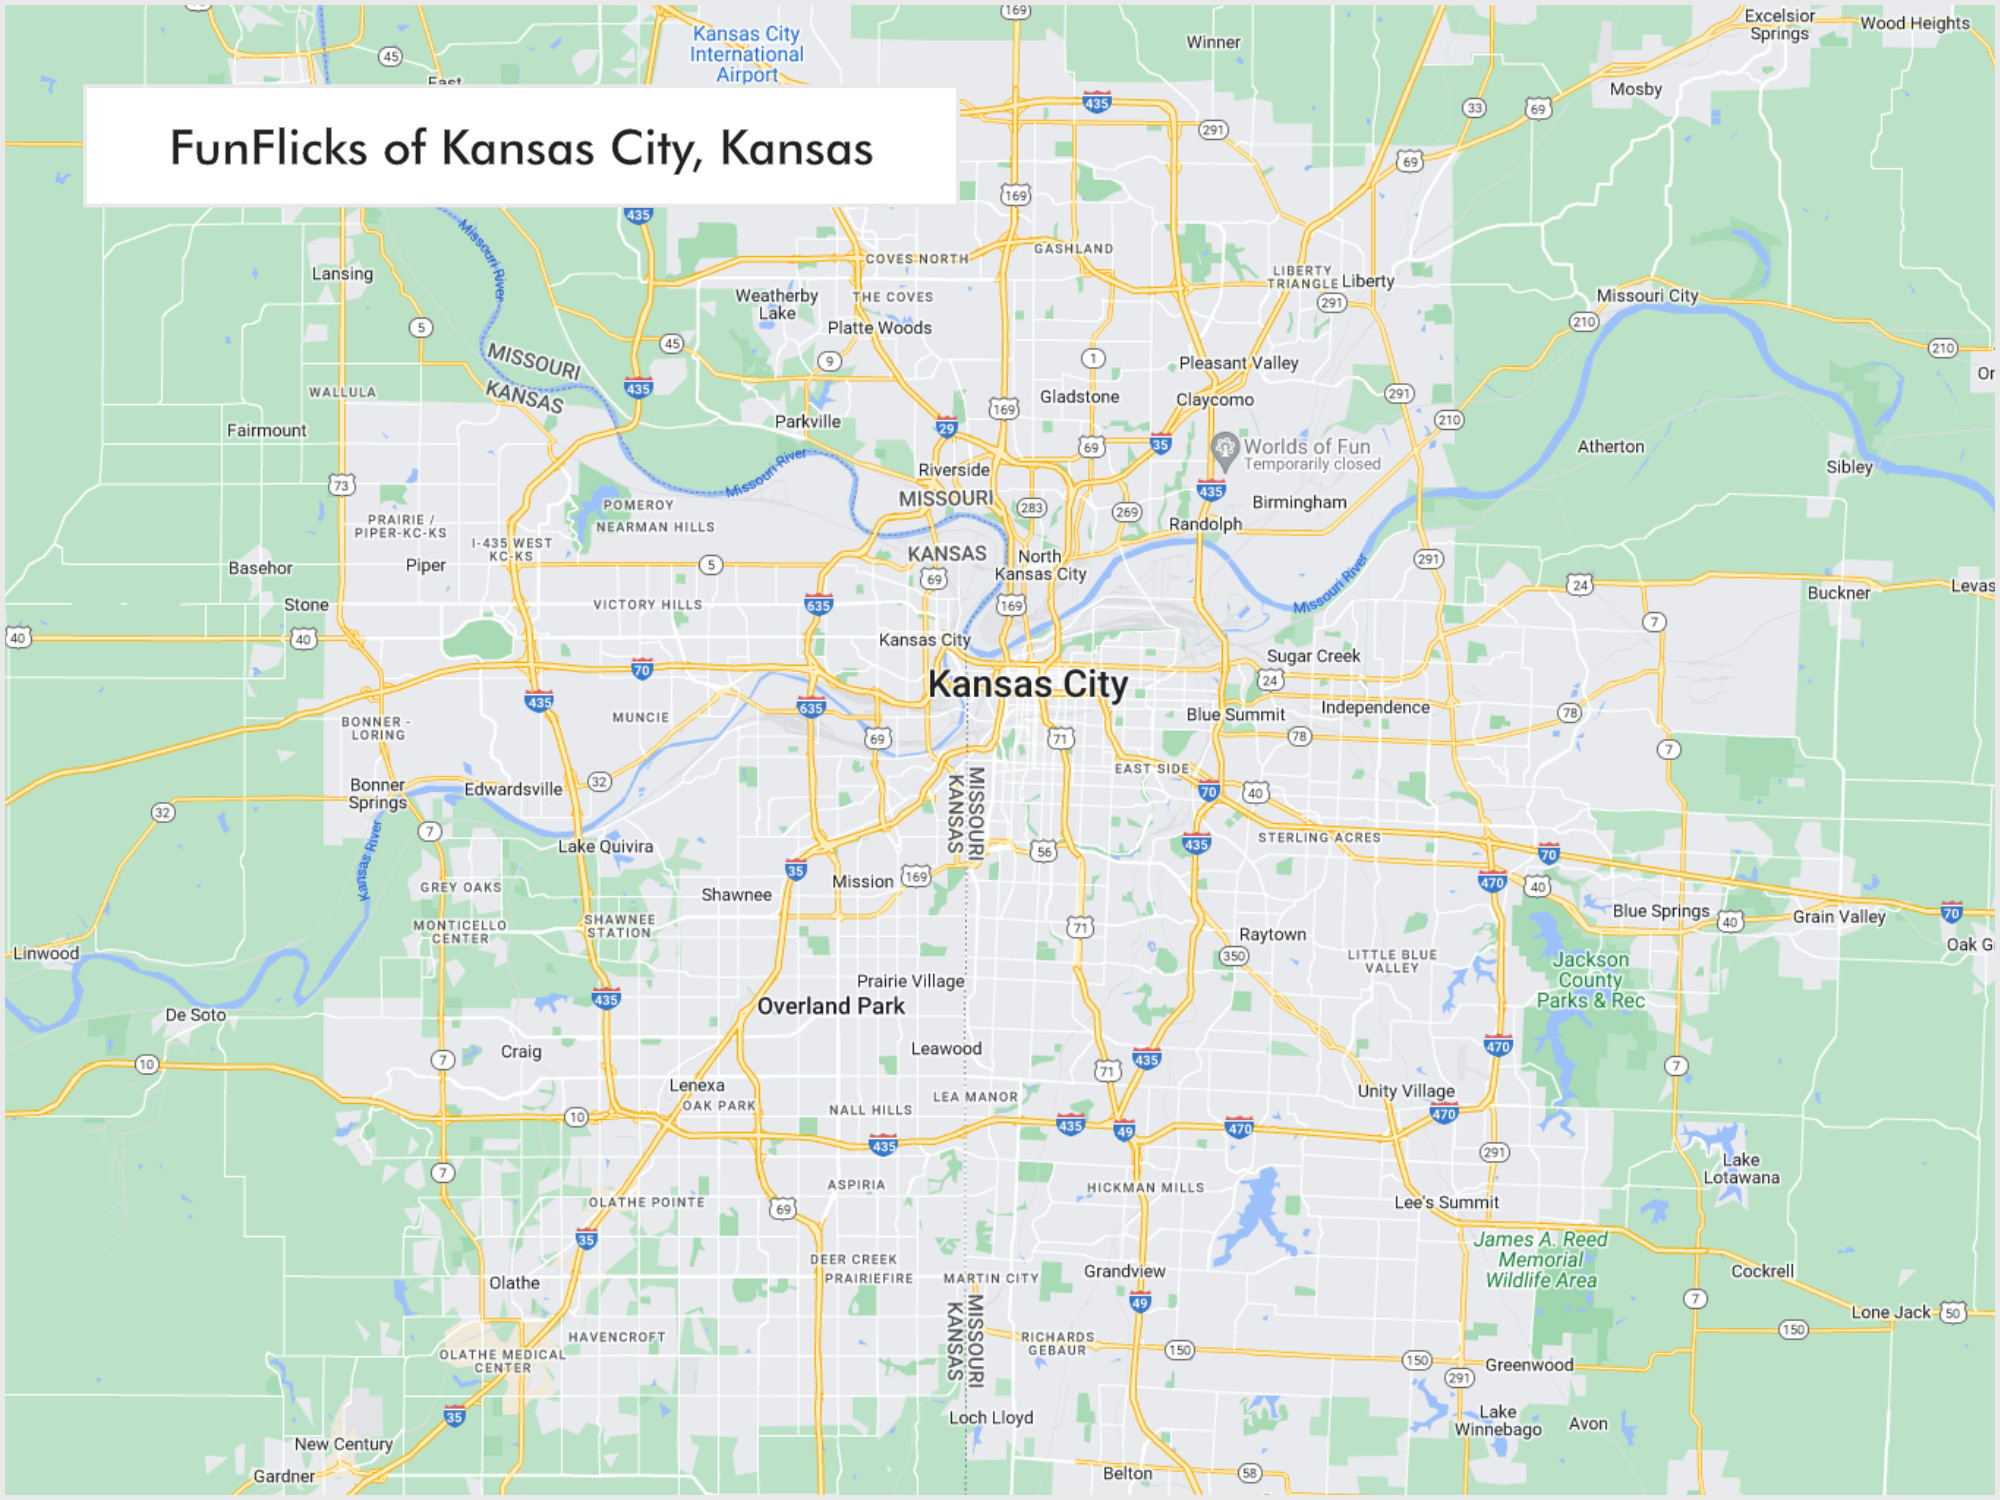 FunFlicks® Kansas City territory map